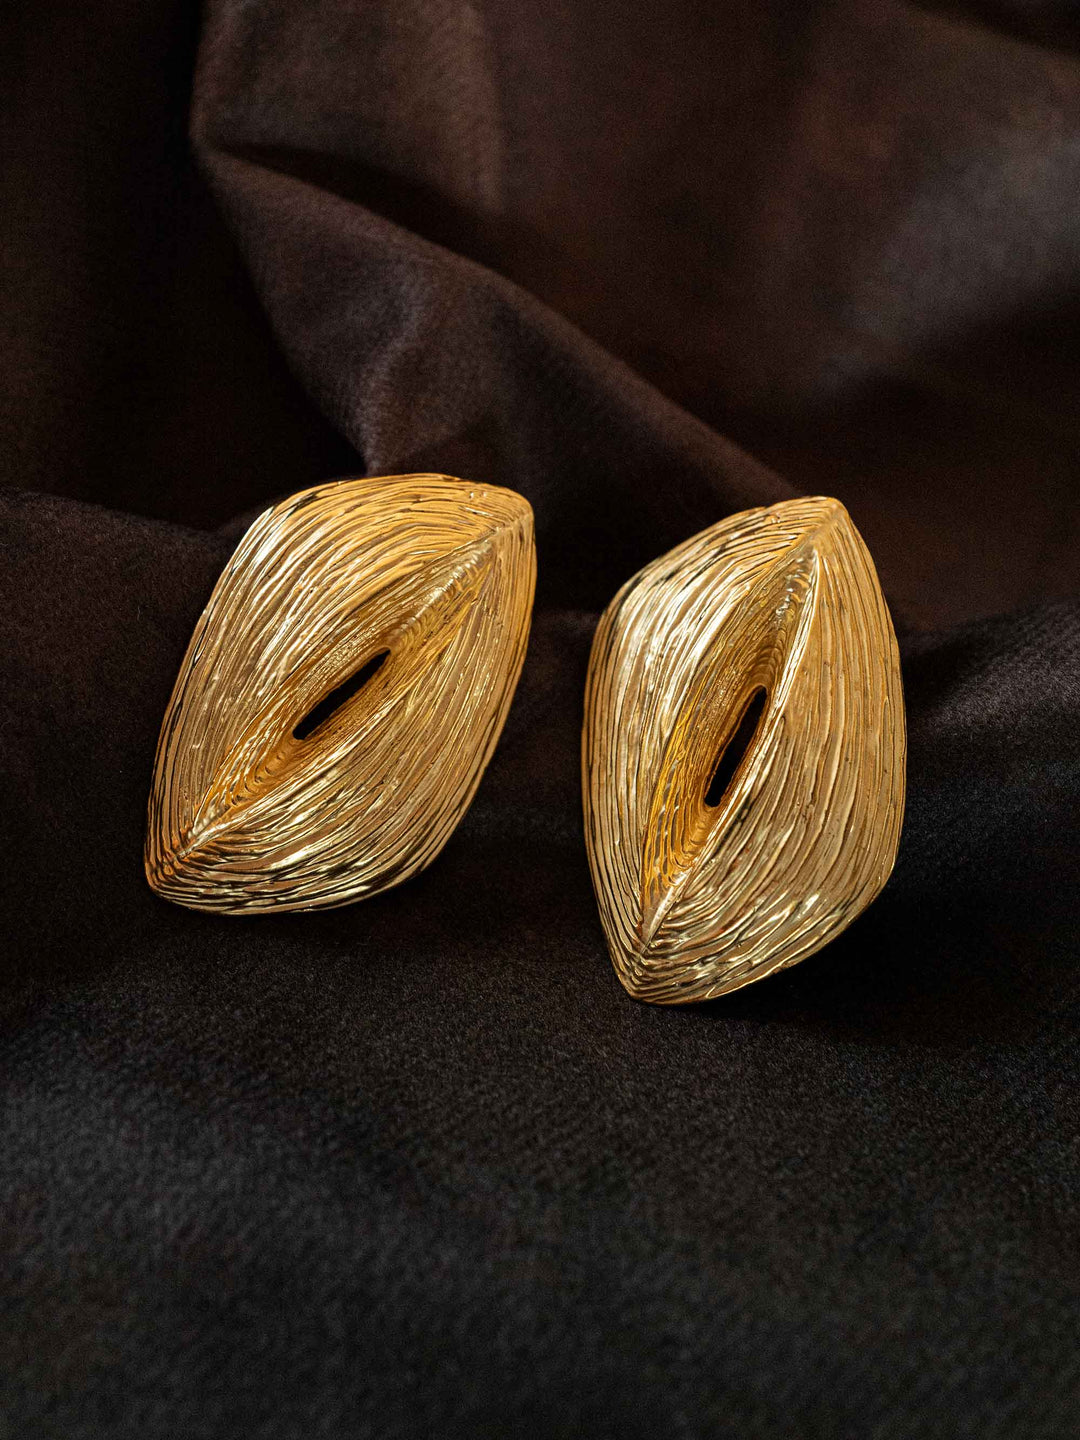 A gold openwork earring